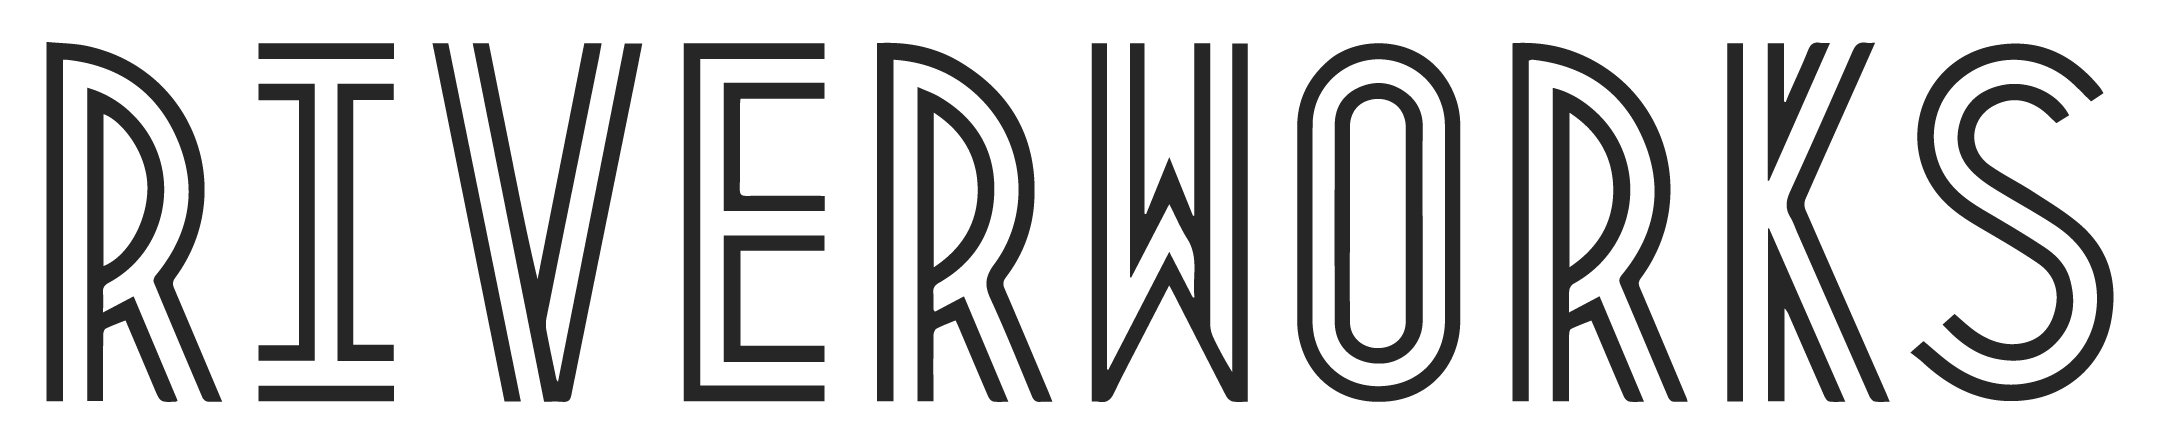 Riverworks Logo